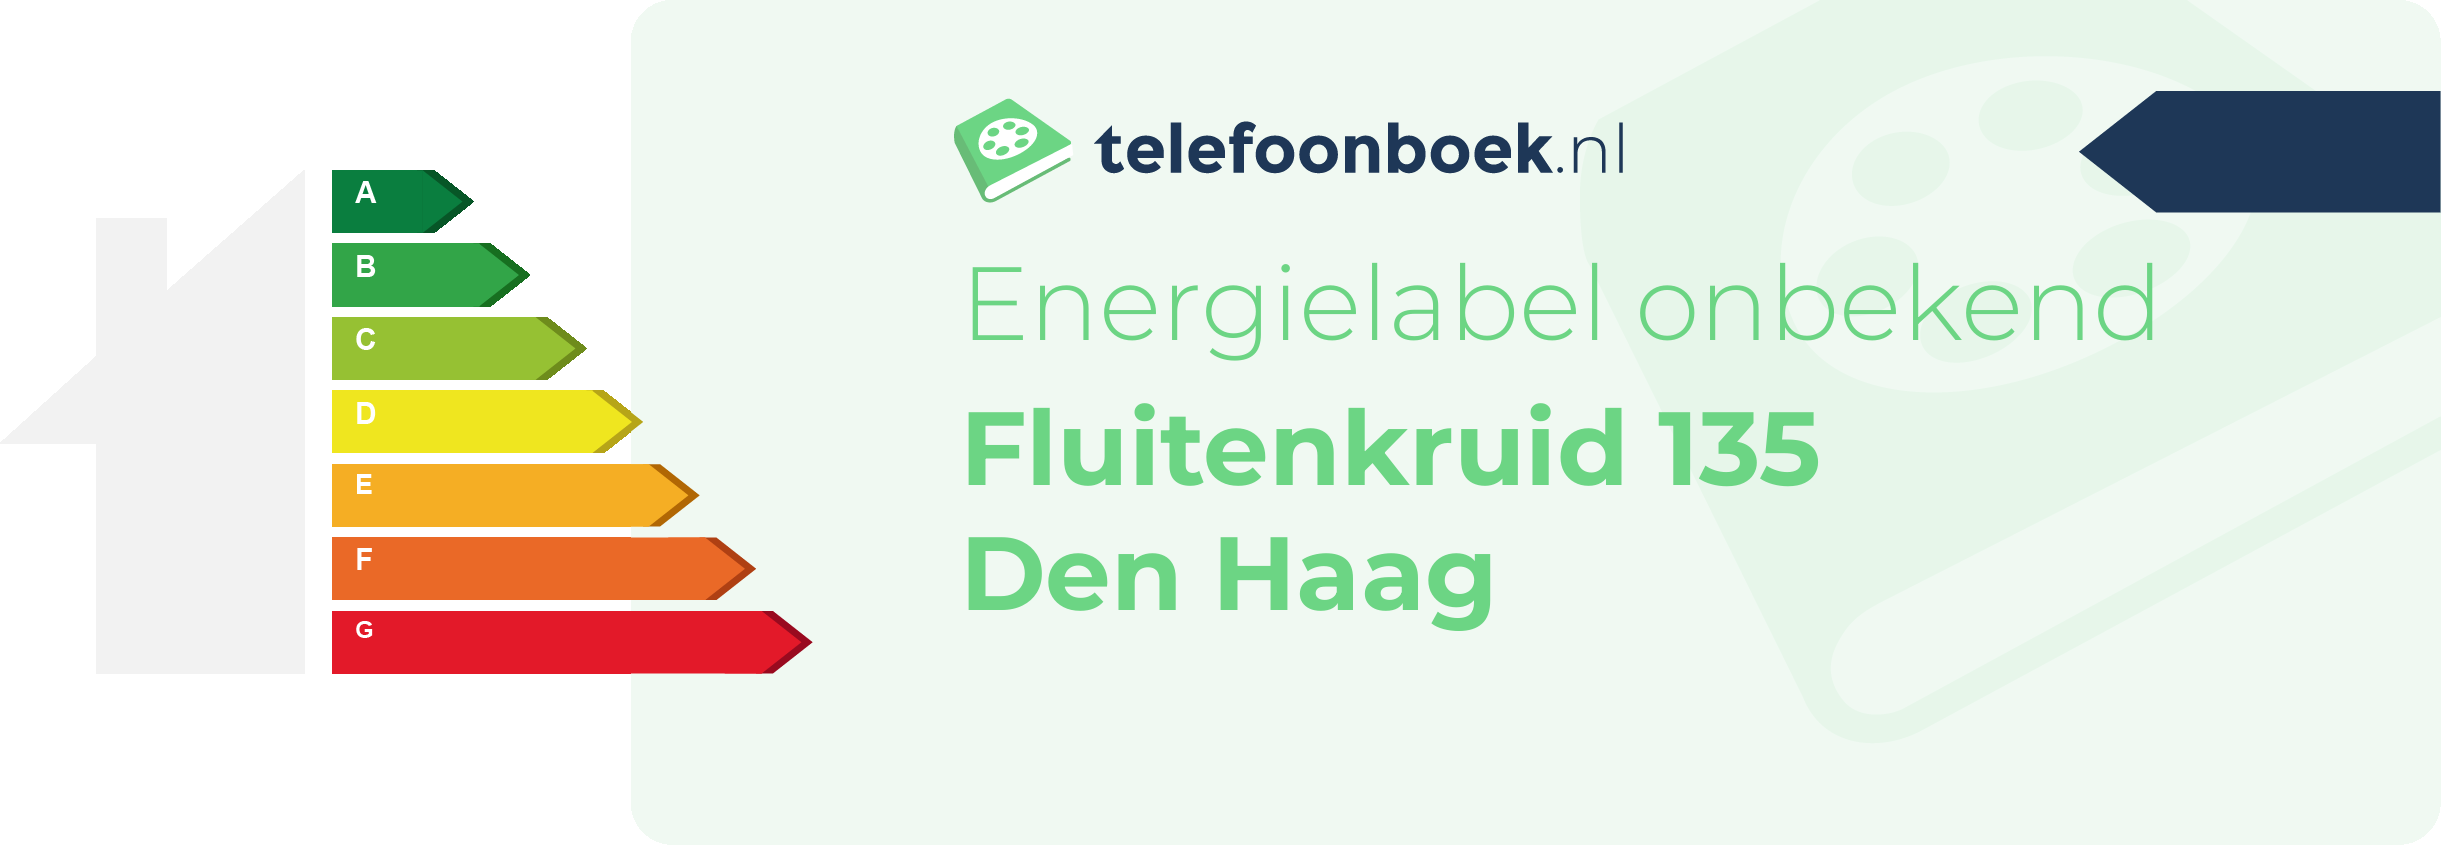 Energielabel Fluitenkruid 135 Den Haag